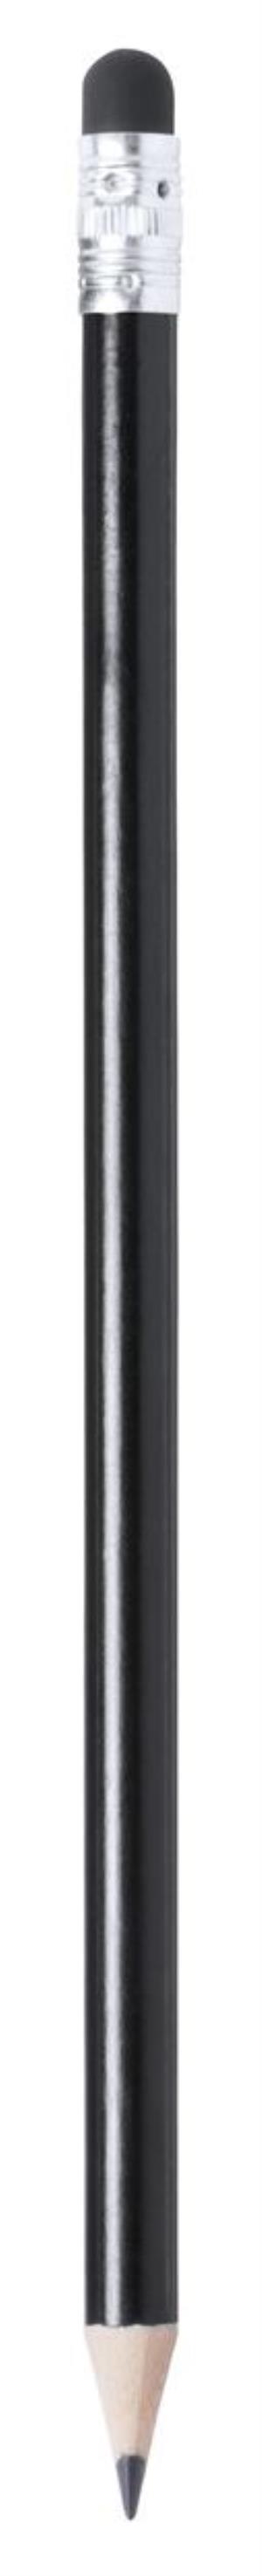 Drevená ceruzka Dilio, čierna